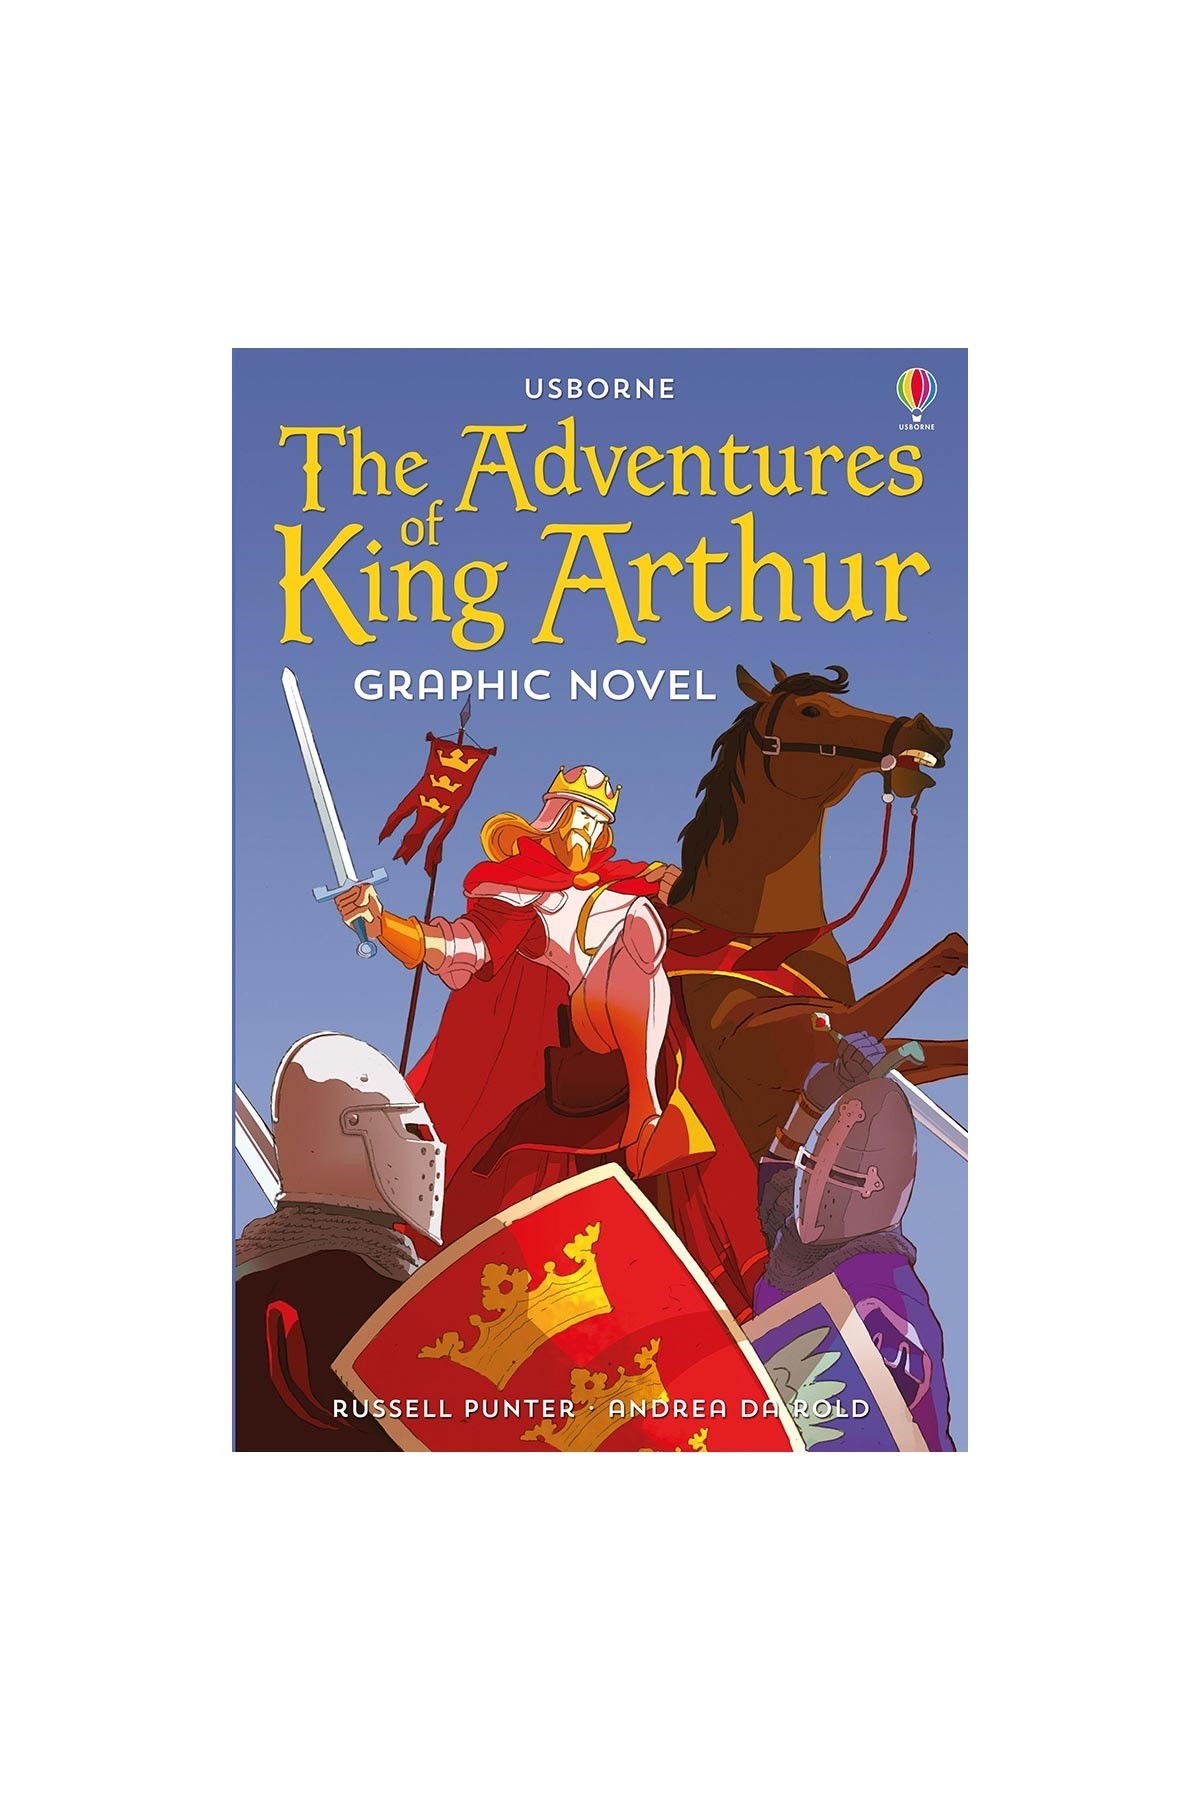 The Usborne Adventures of King Arthur